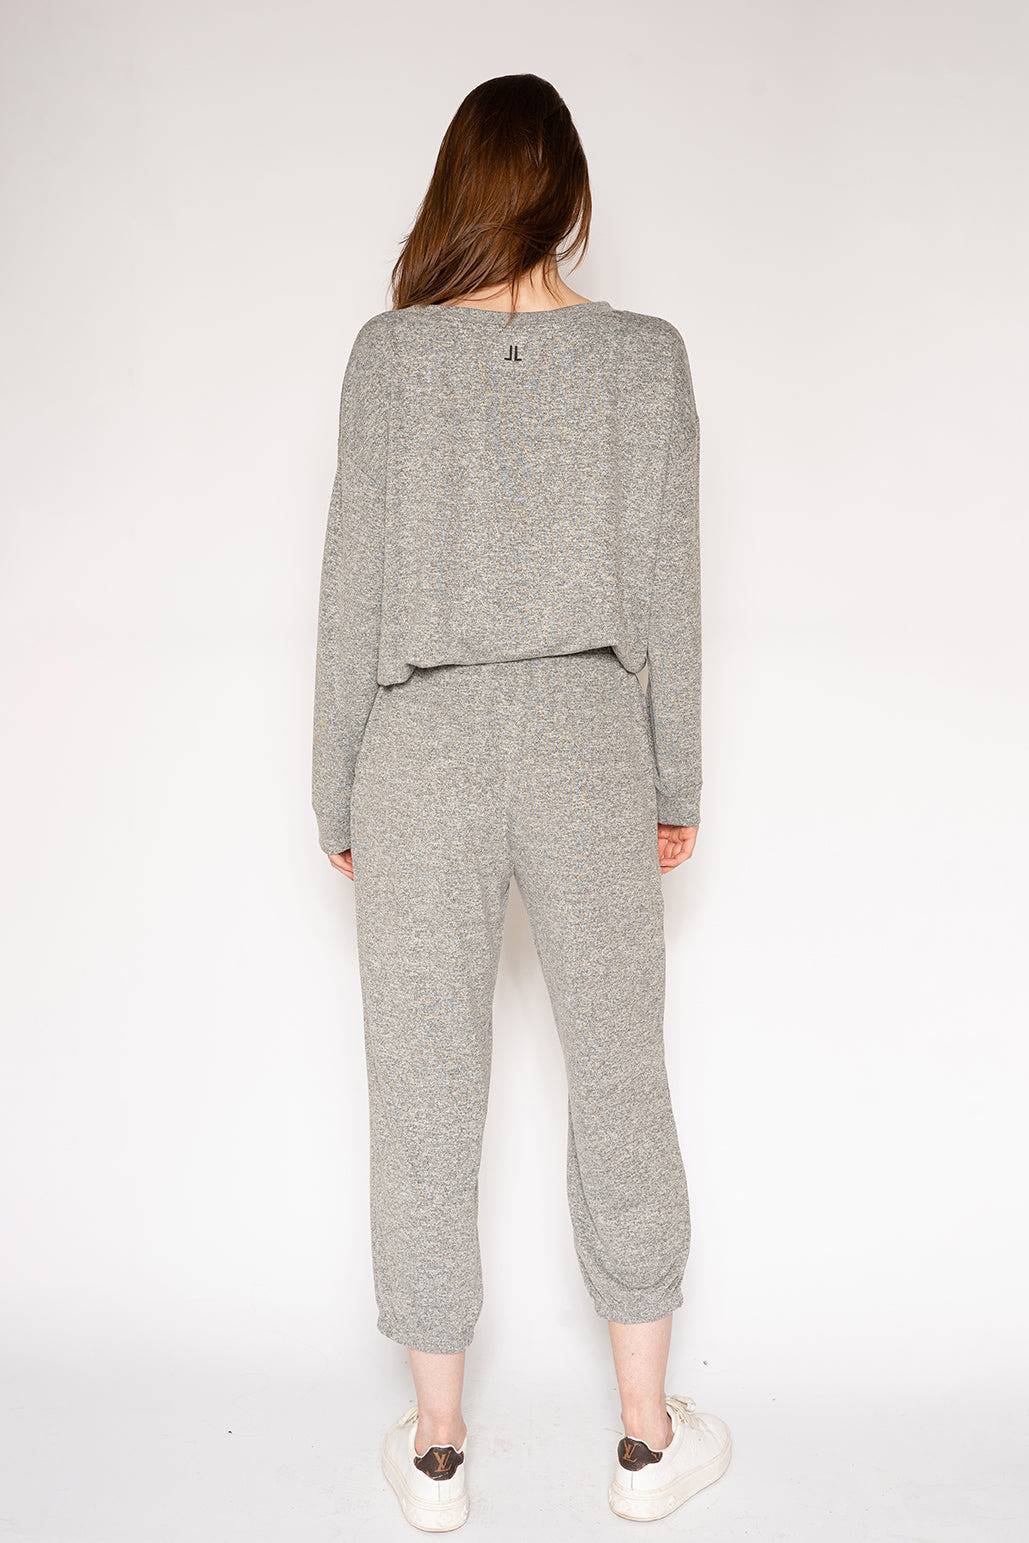 Marled Knit Hacci Sweatshirt - LATTELOVE Co.